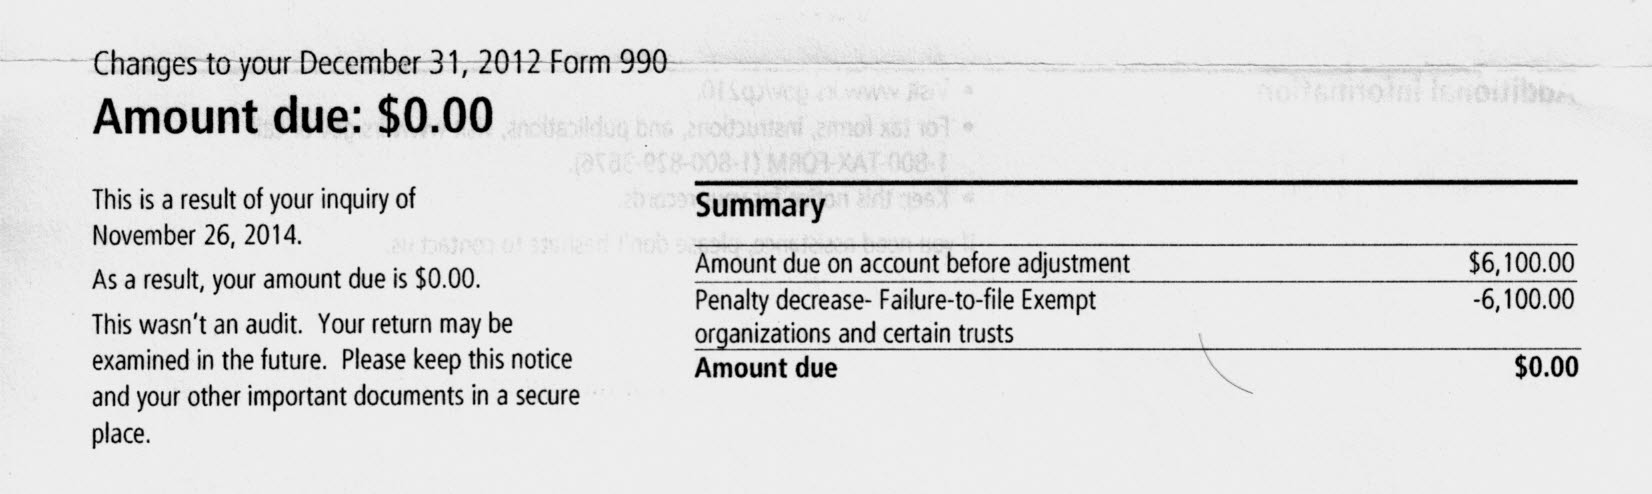 IRS nonprofit penalty abatement letter image